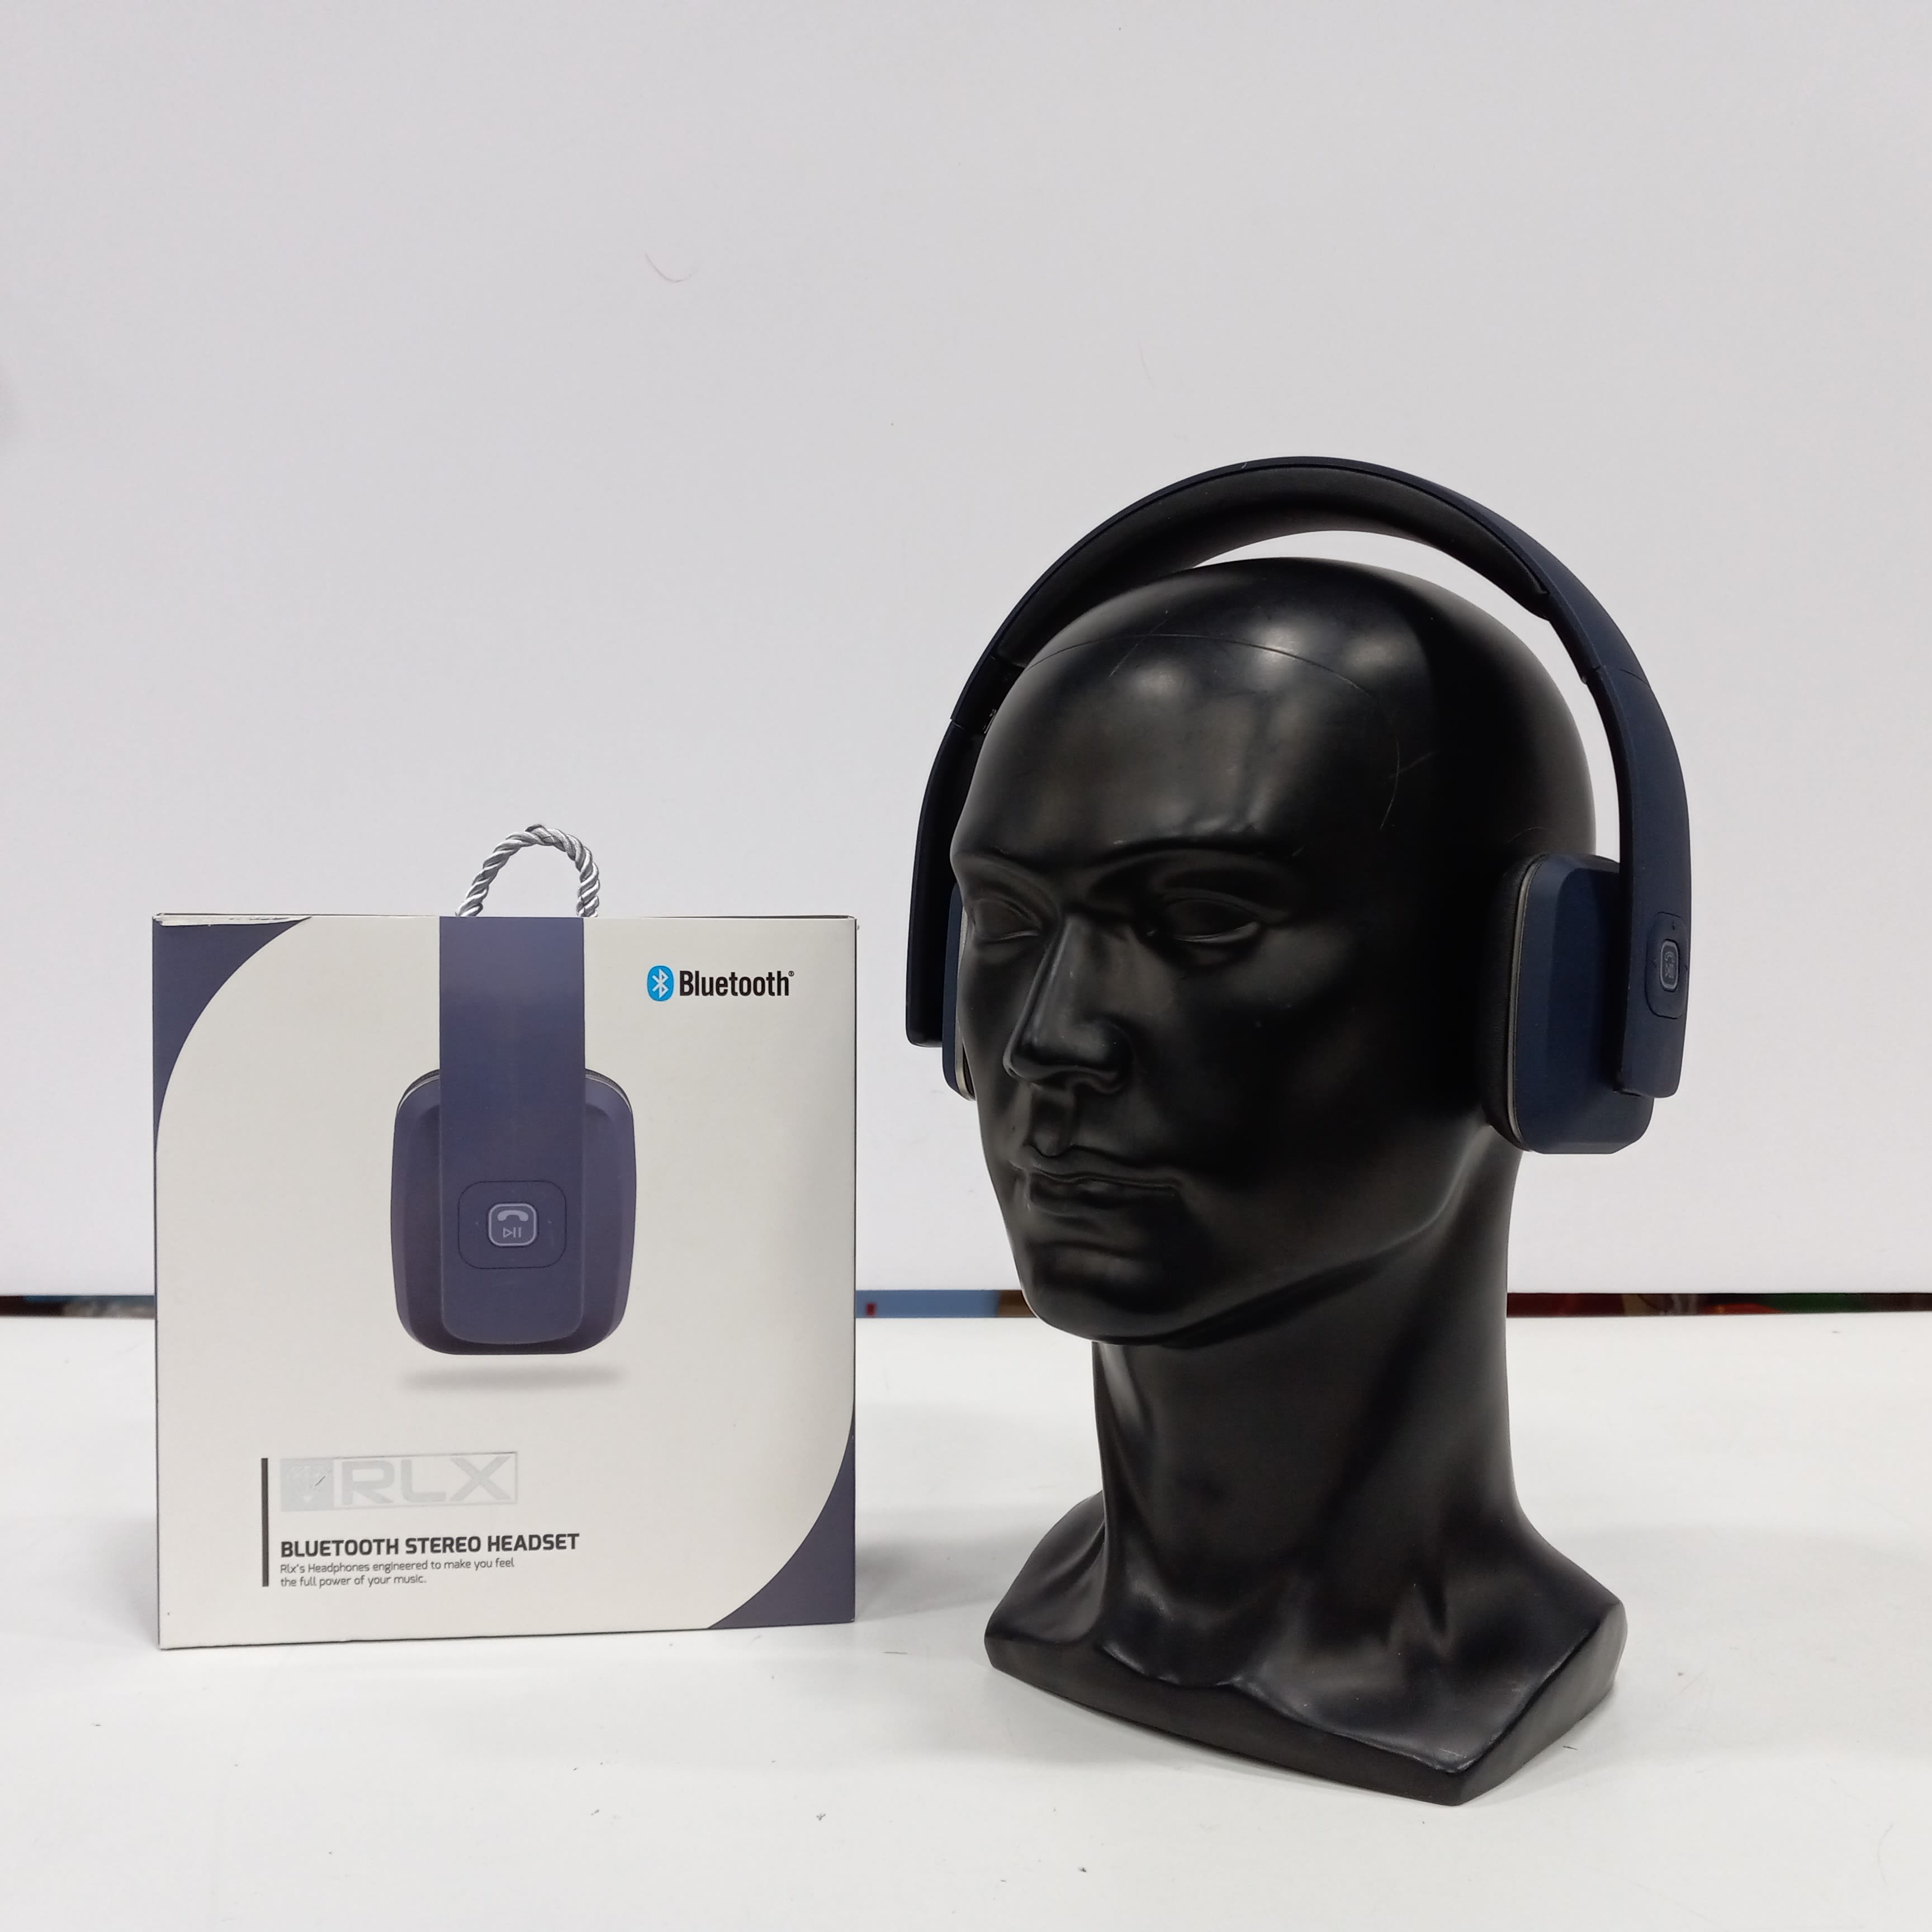 Buy the Rlx Bluetooth Stereo Headset w/Box